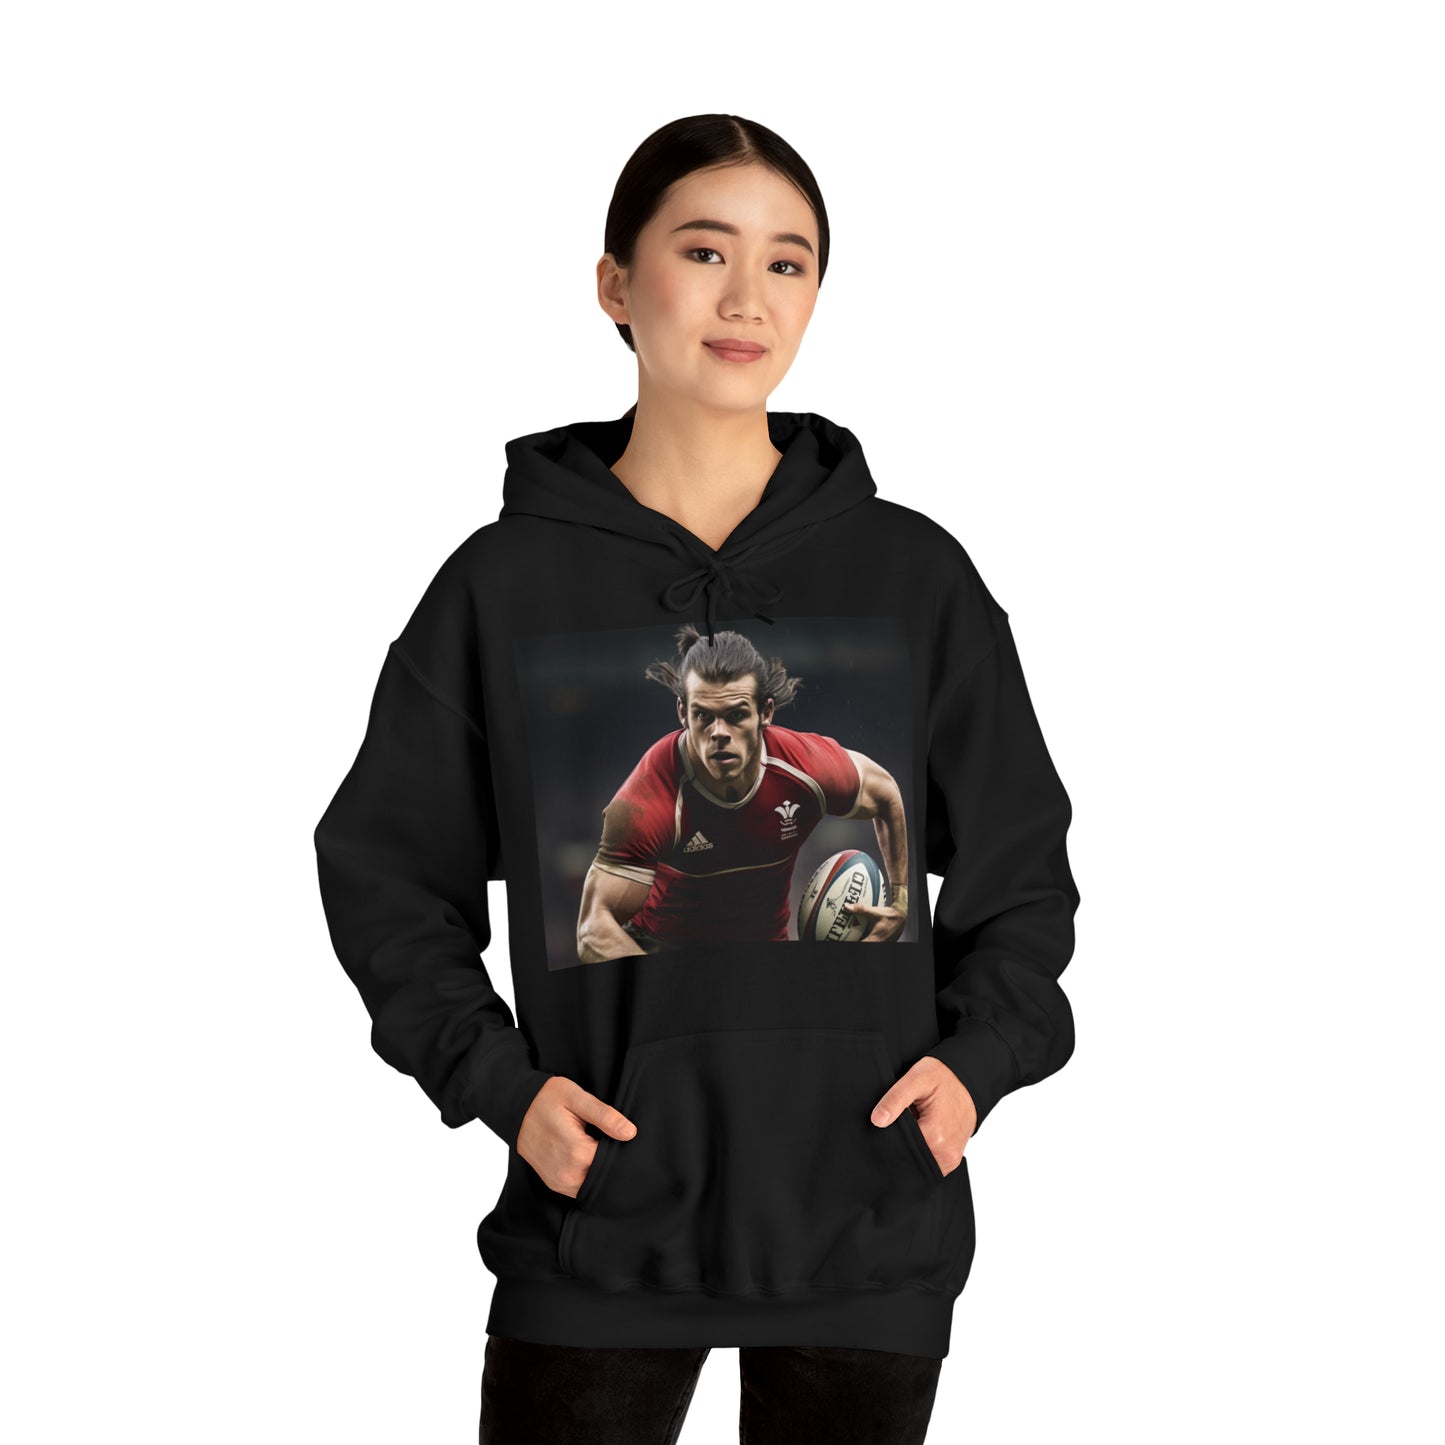 Ready Bale - dark hoodies